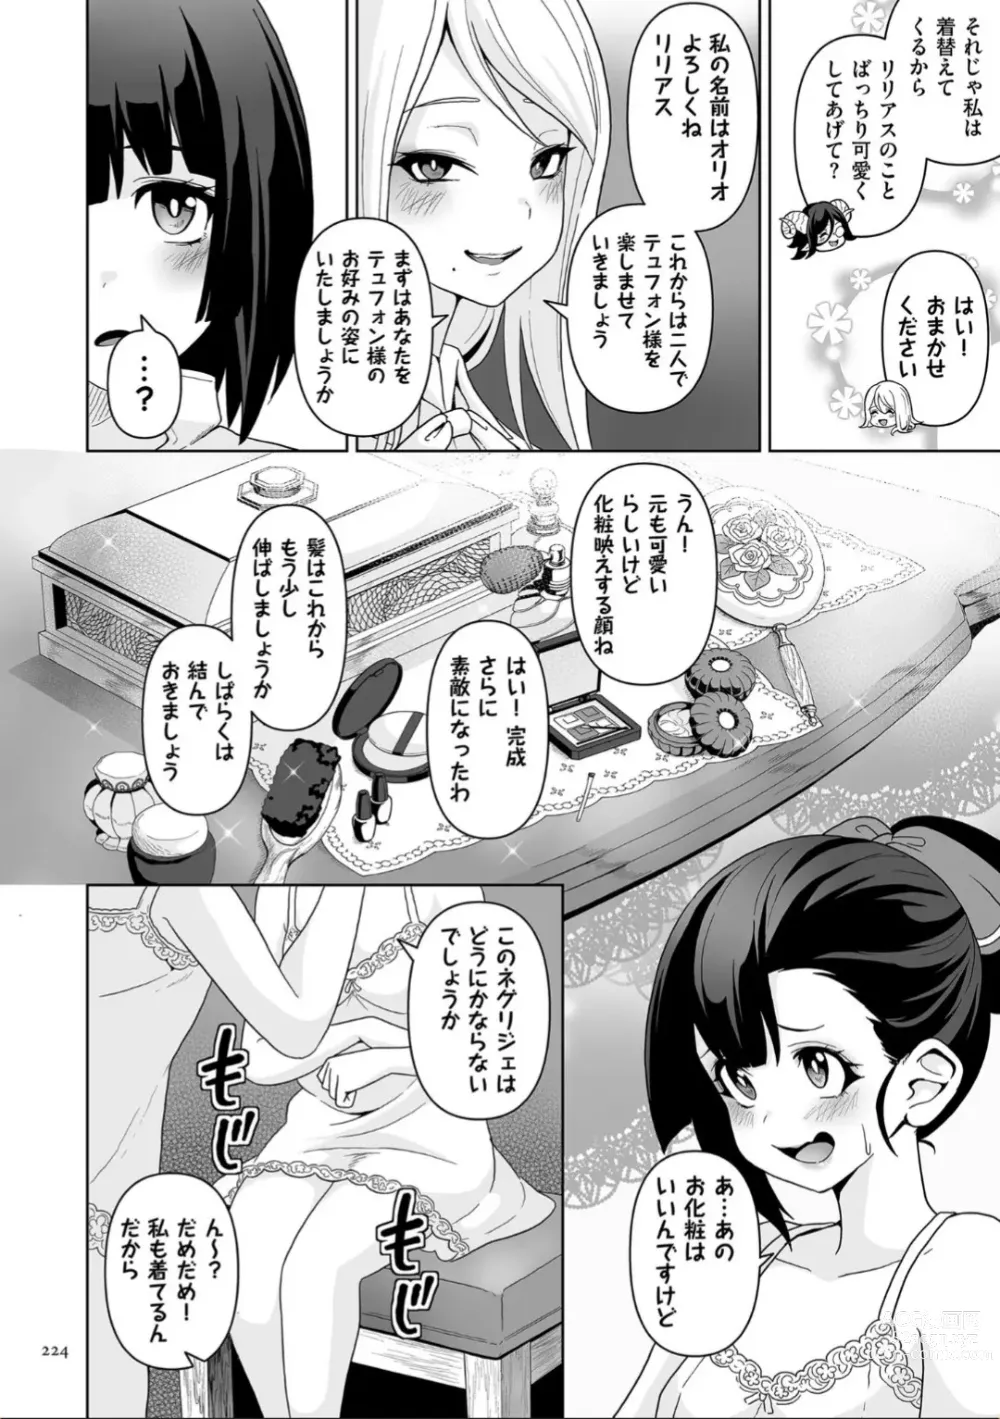 Page 224 of manga Succubus Kingdom